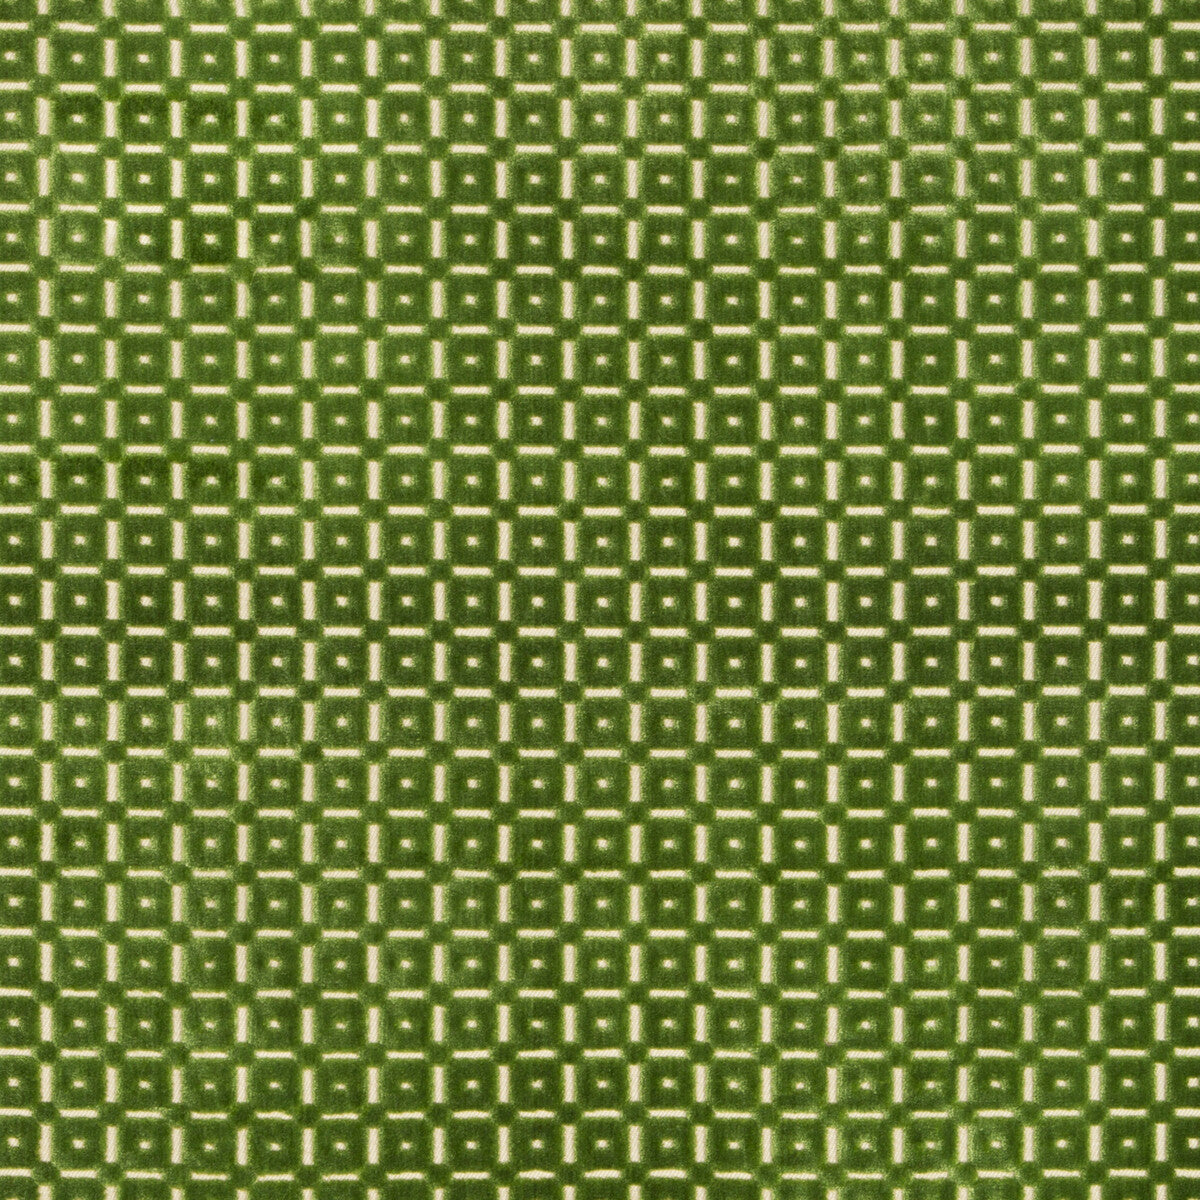 Savanne Velvet fabric in leaf color - pattern 8018110.3.0 - by Brunschwig &amp; Fils in the Cevennes collection